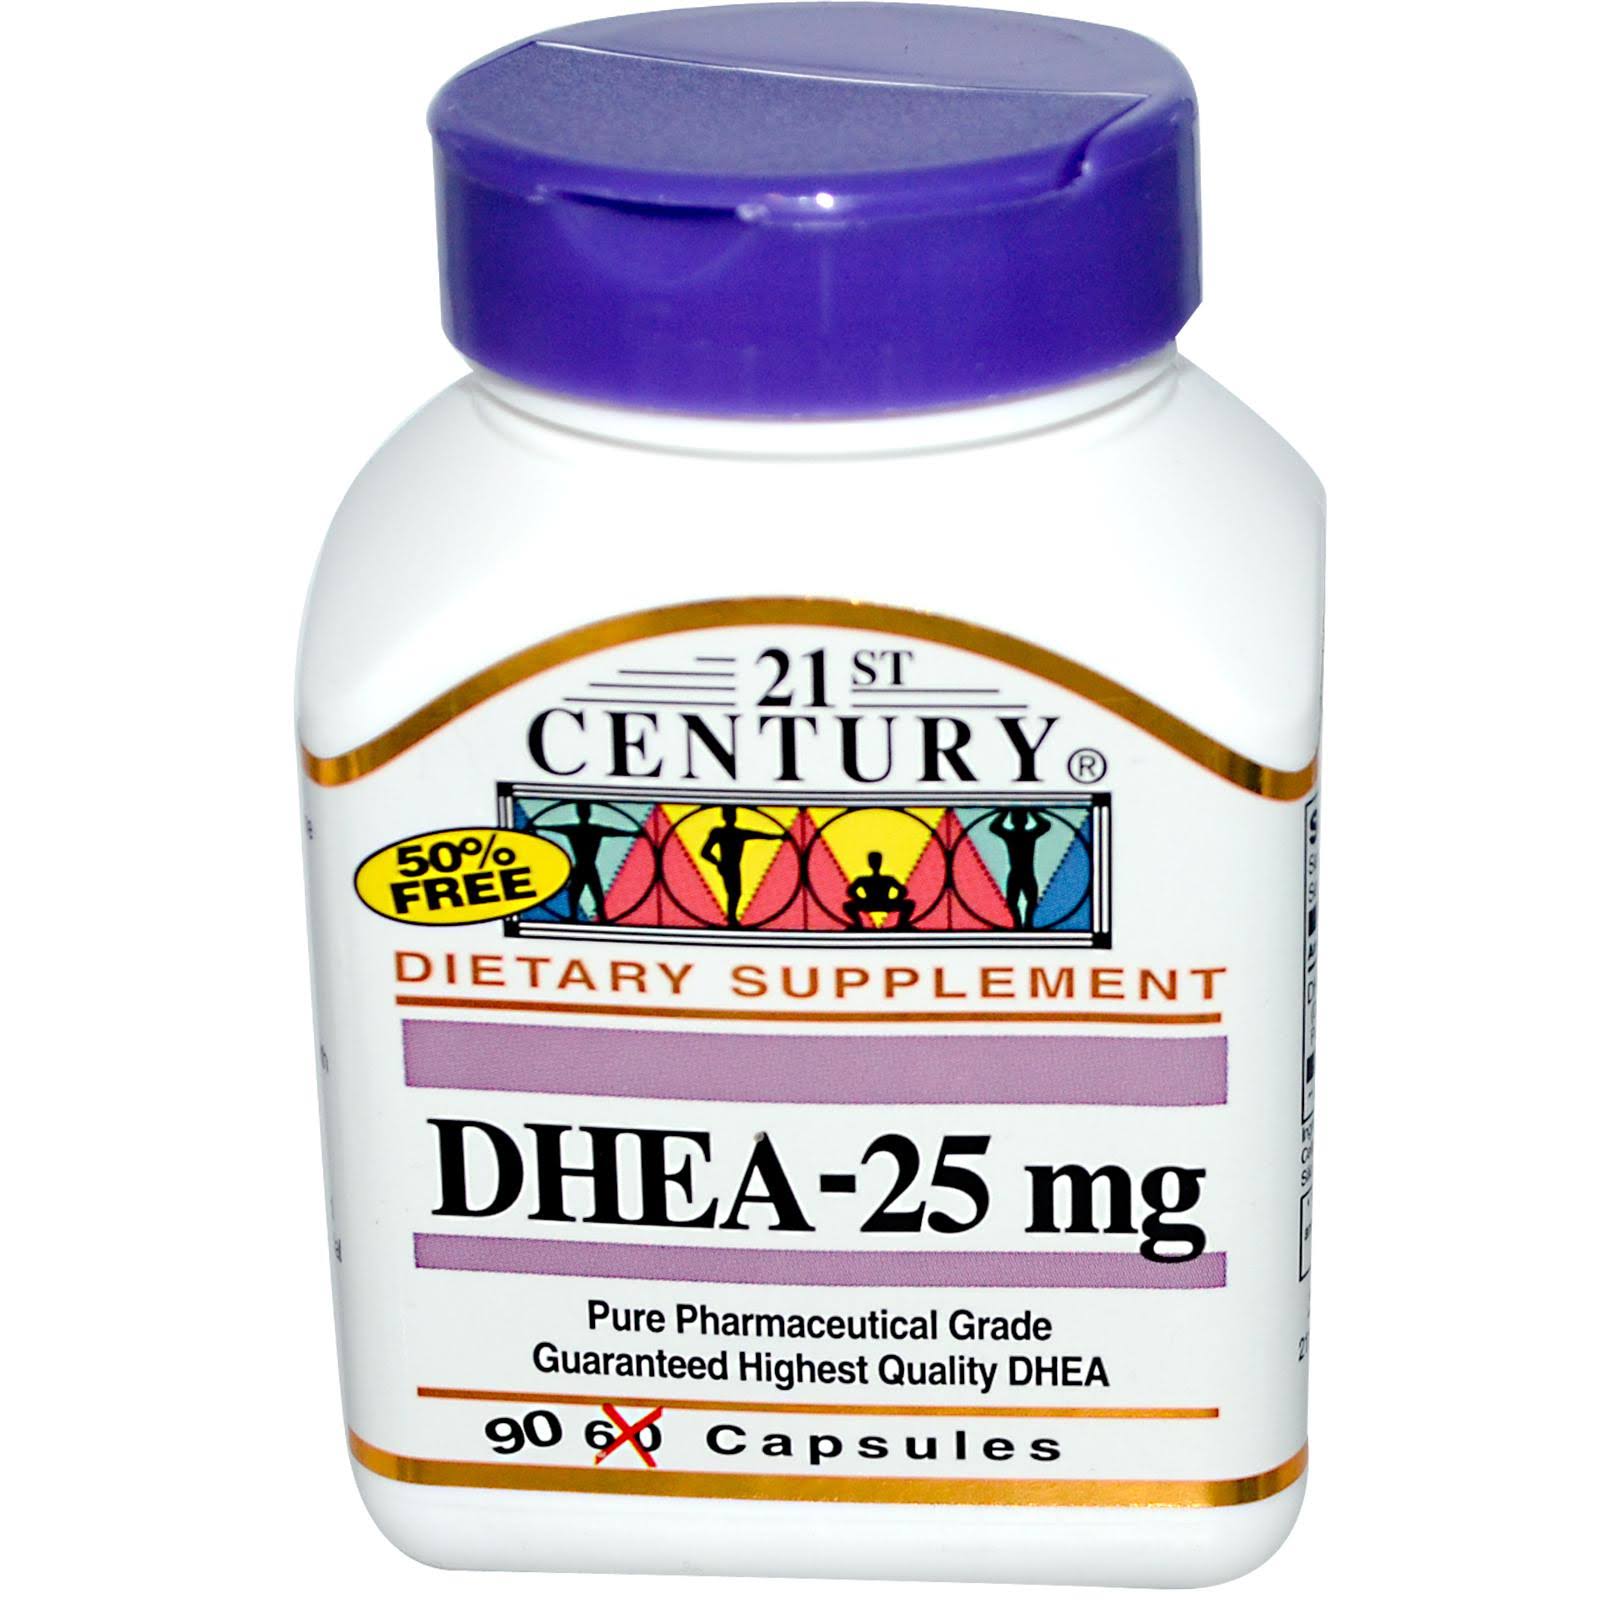 21st Century DHEA Dietary Supplement - 90 Capsules